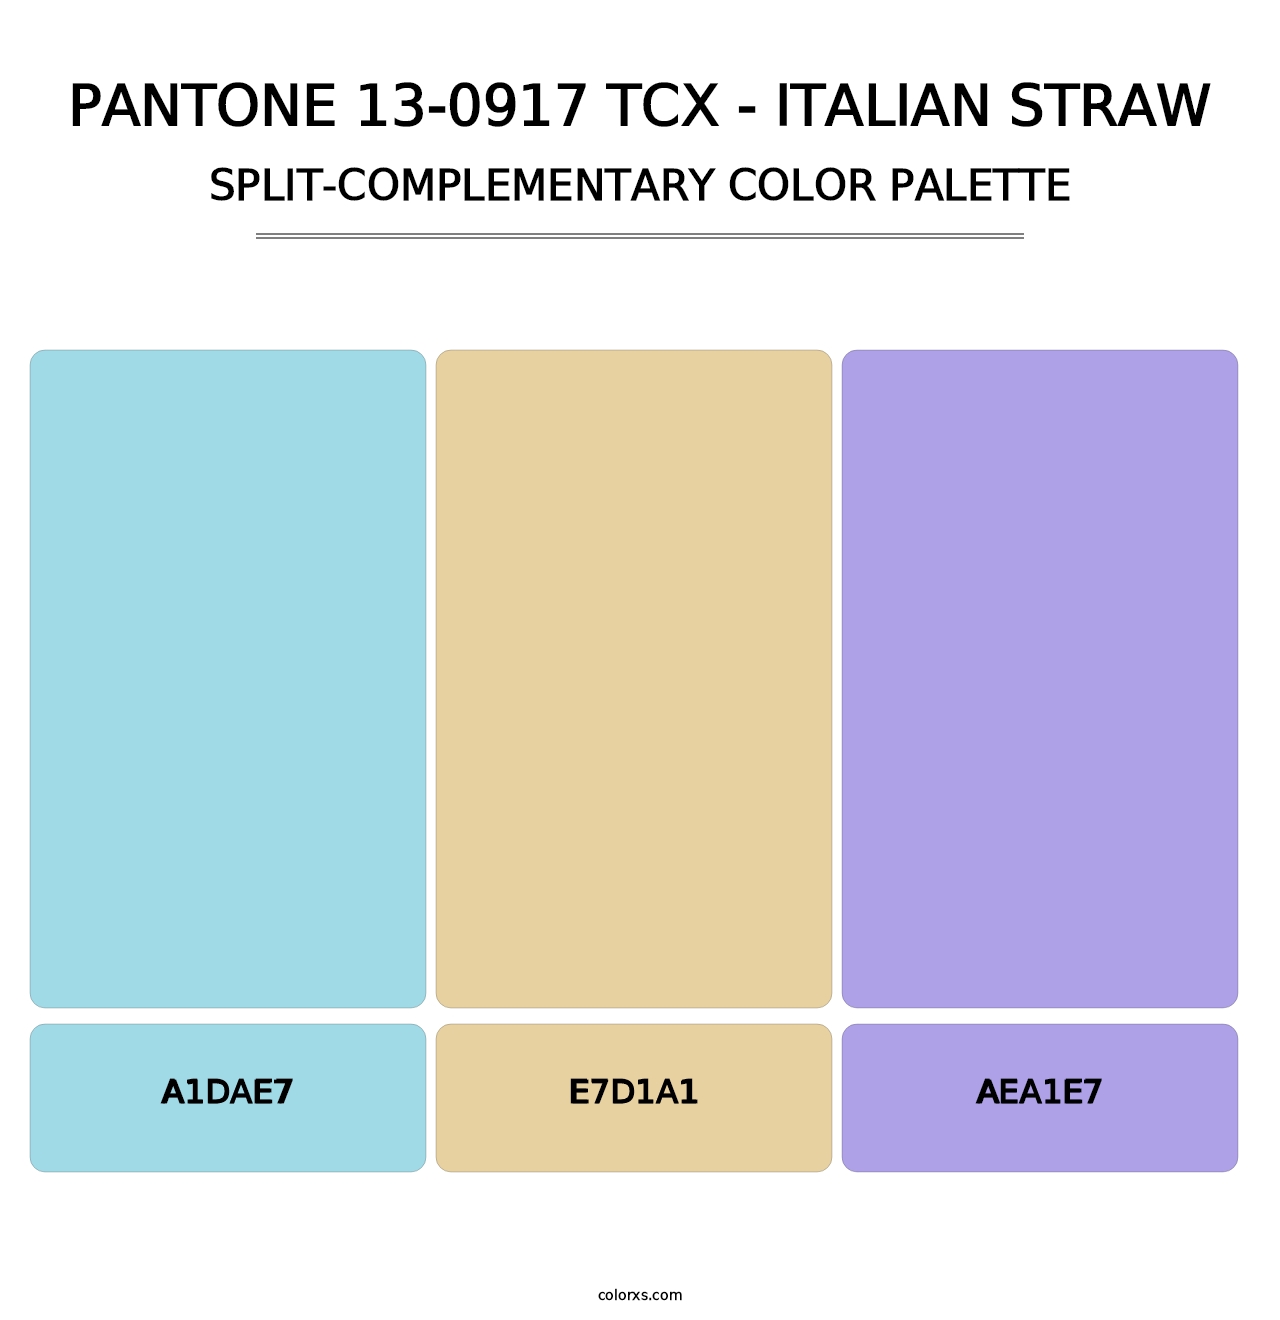 PANTONE 13-0917 TCX - Italian Straw - Split-Complementary Color Palette